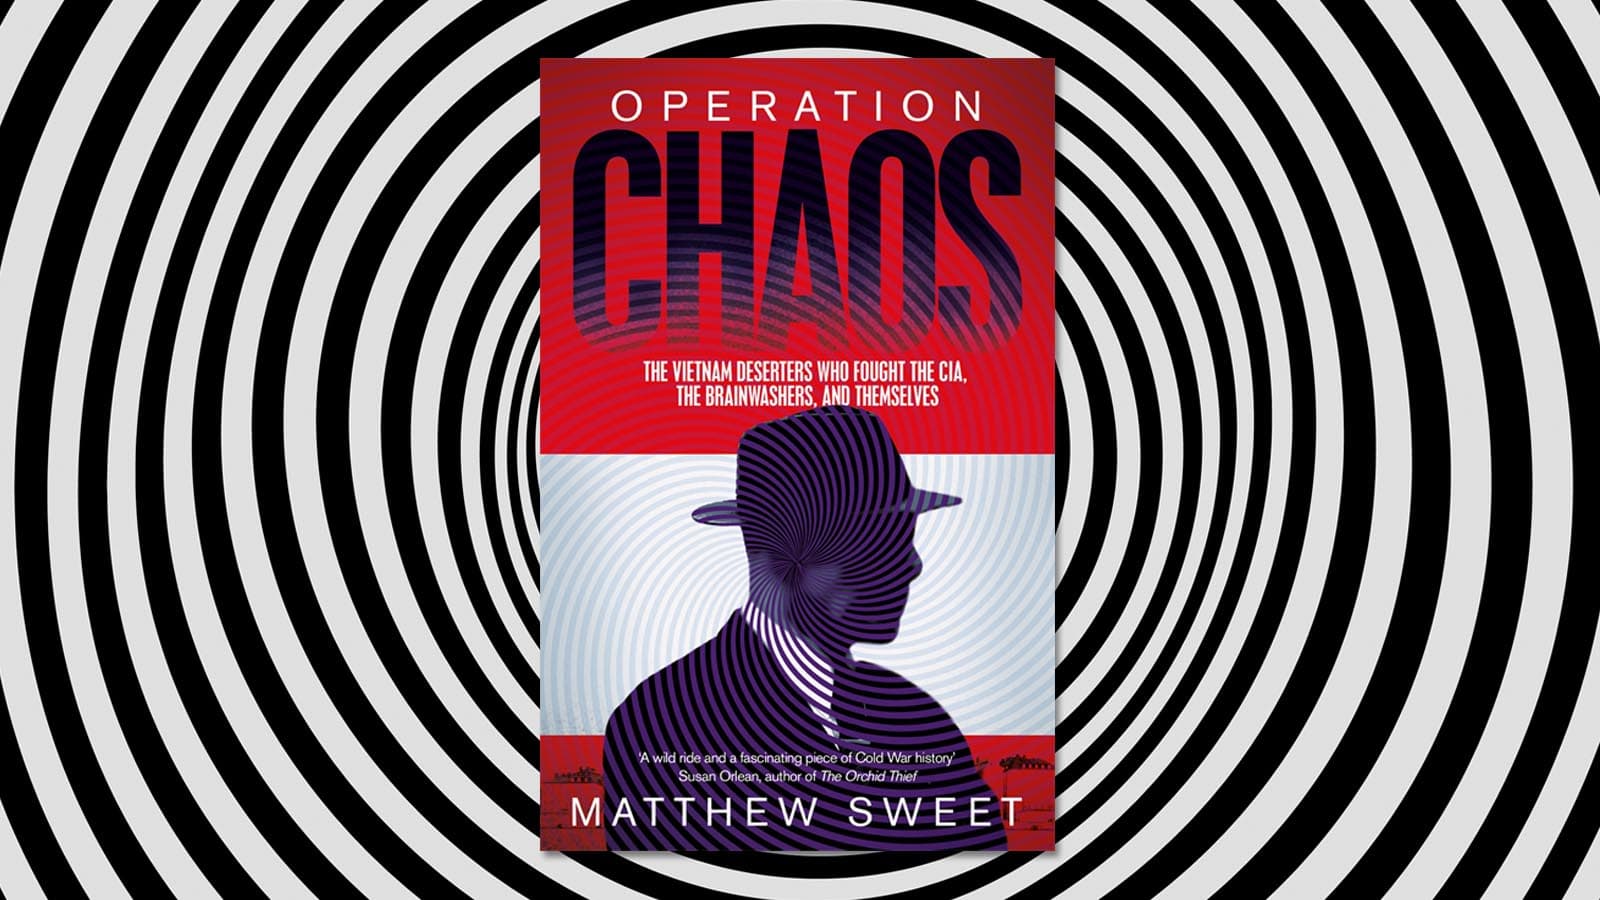 Operation Chaos by Matthew Sweet